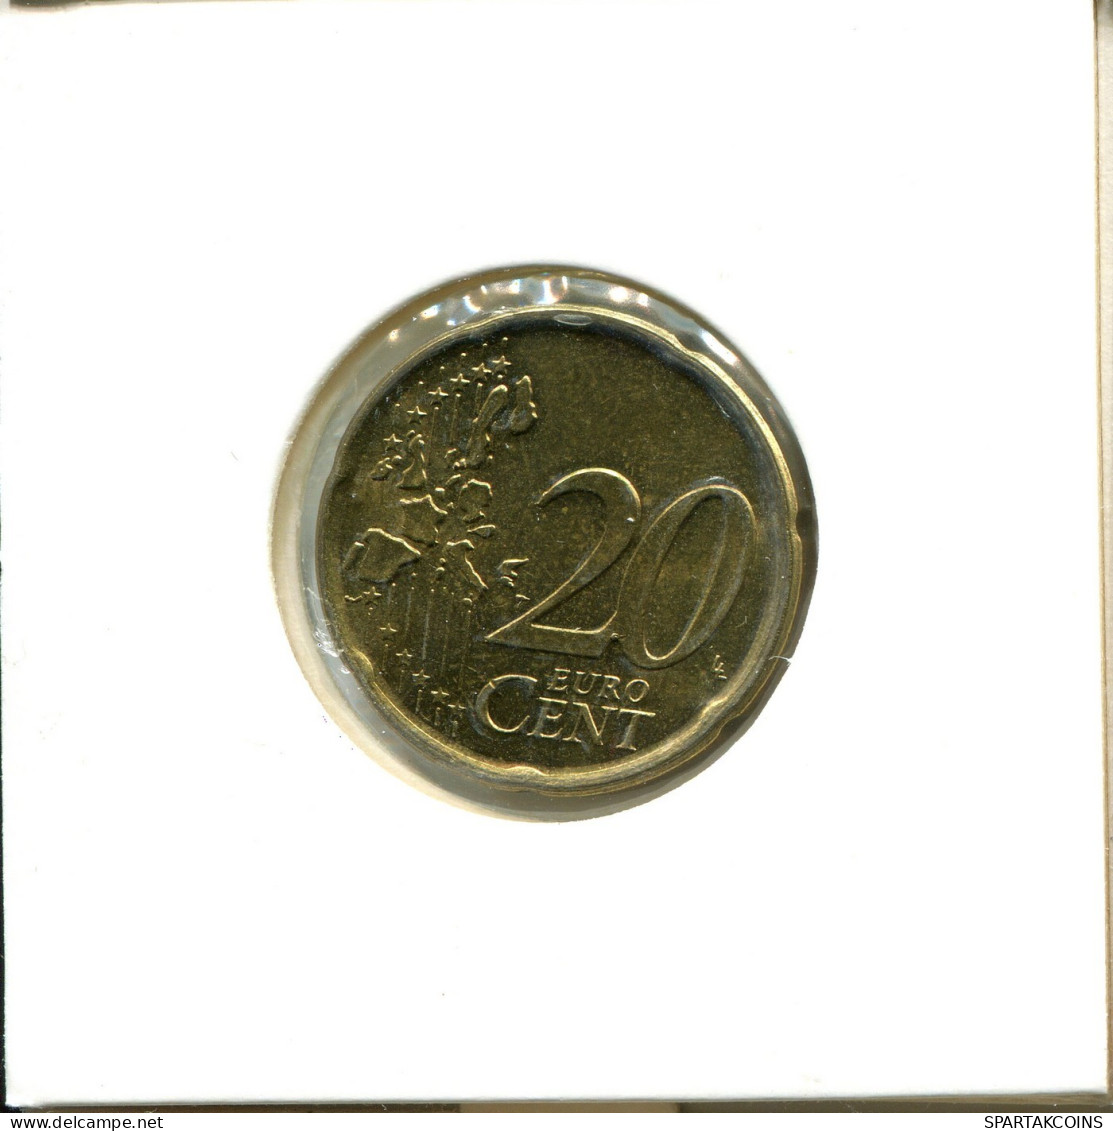 20 EURO CENTS 2004 ESPAGNE SPAIN Pièce #EU364.F.A - Espagne